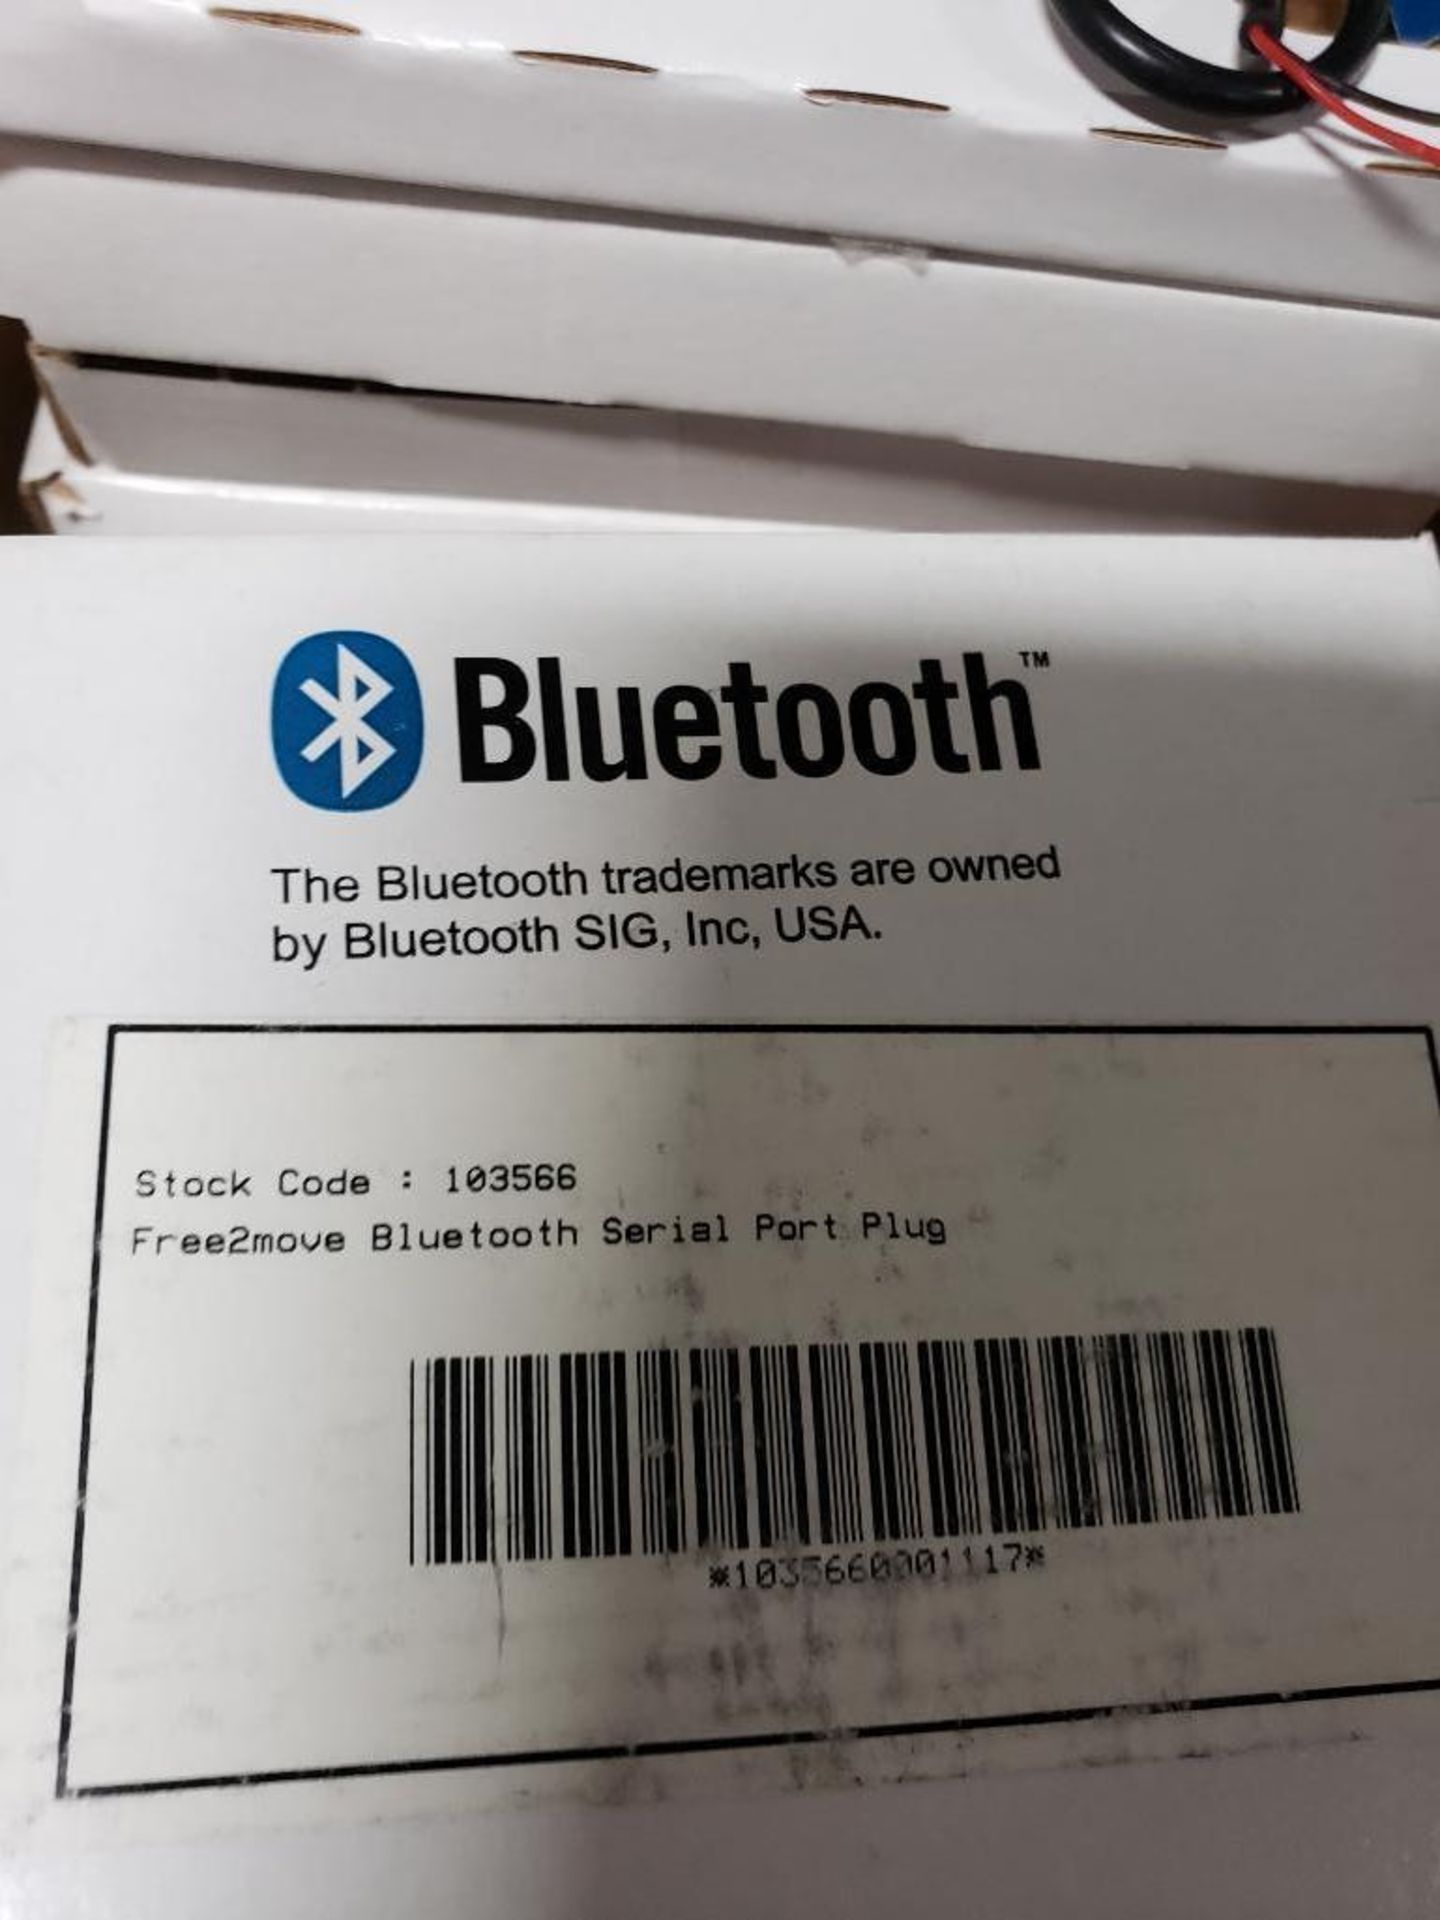 Qty 9 - Free2move bluetooh serial port plug stock 103566. - Image 2 of 3